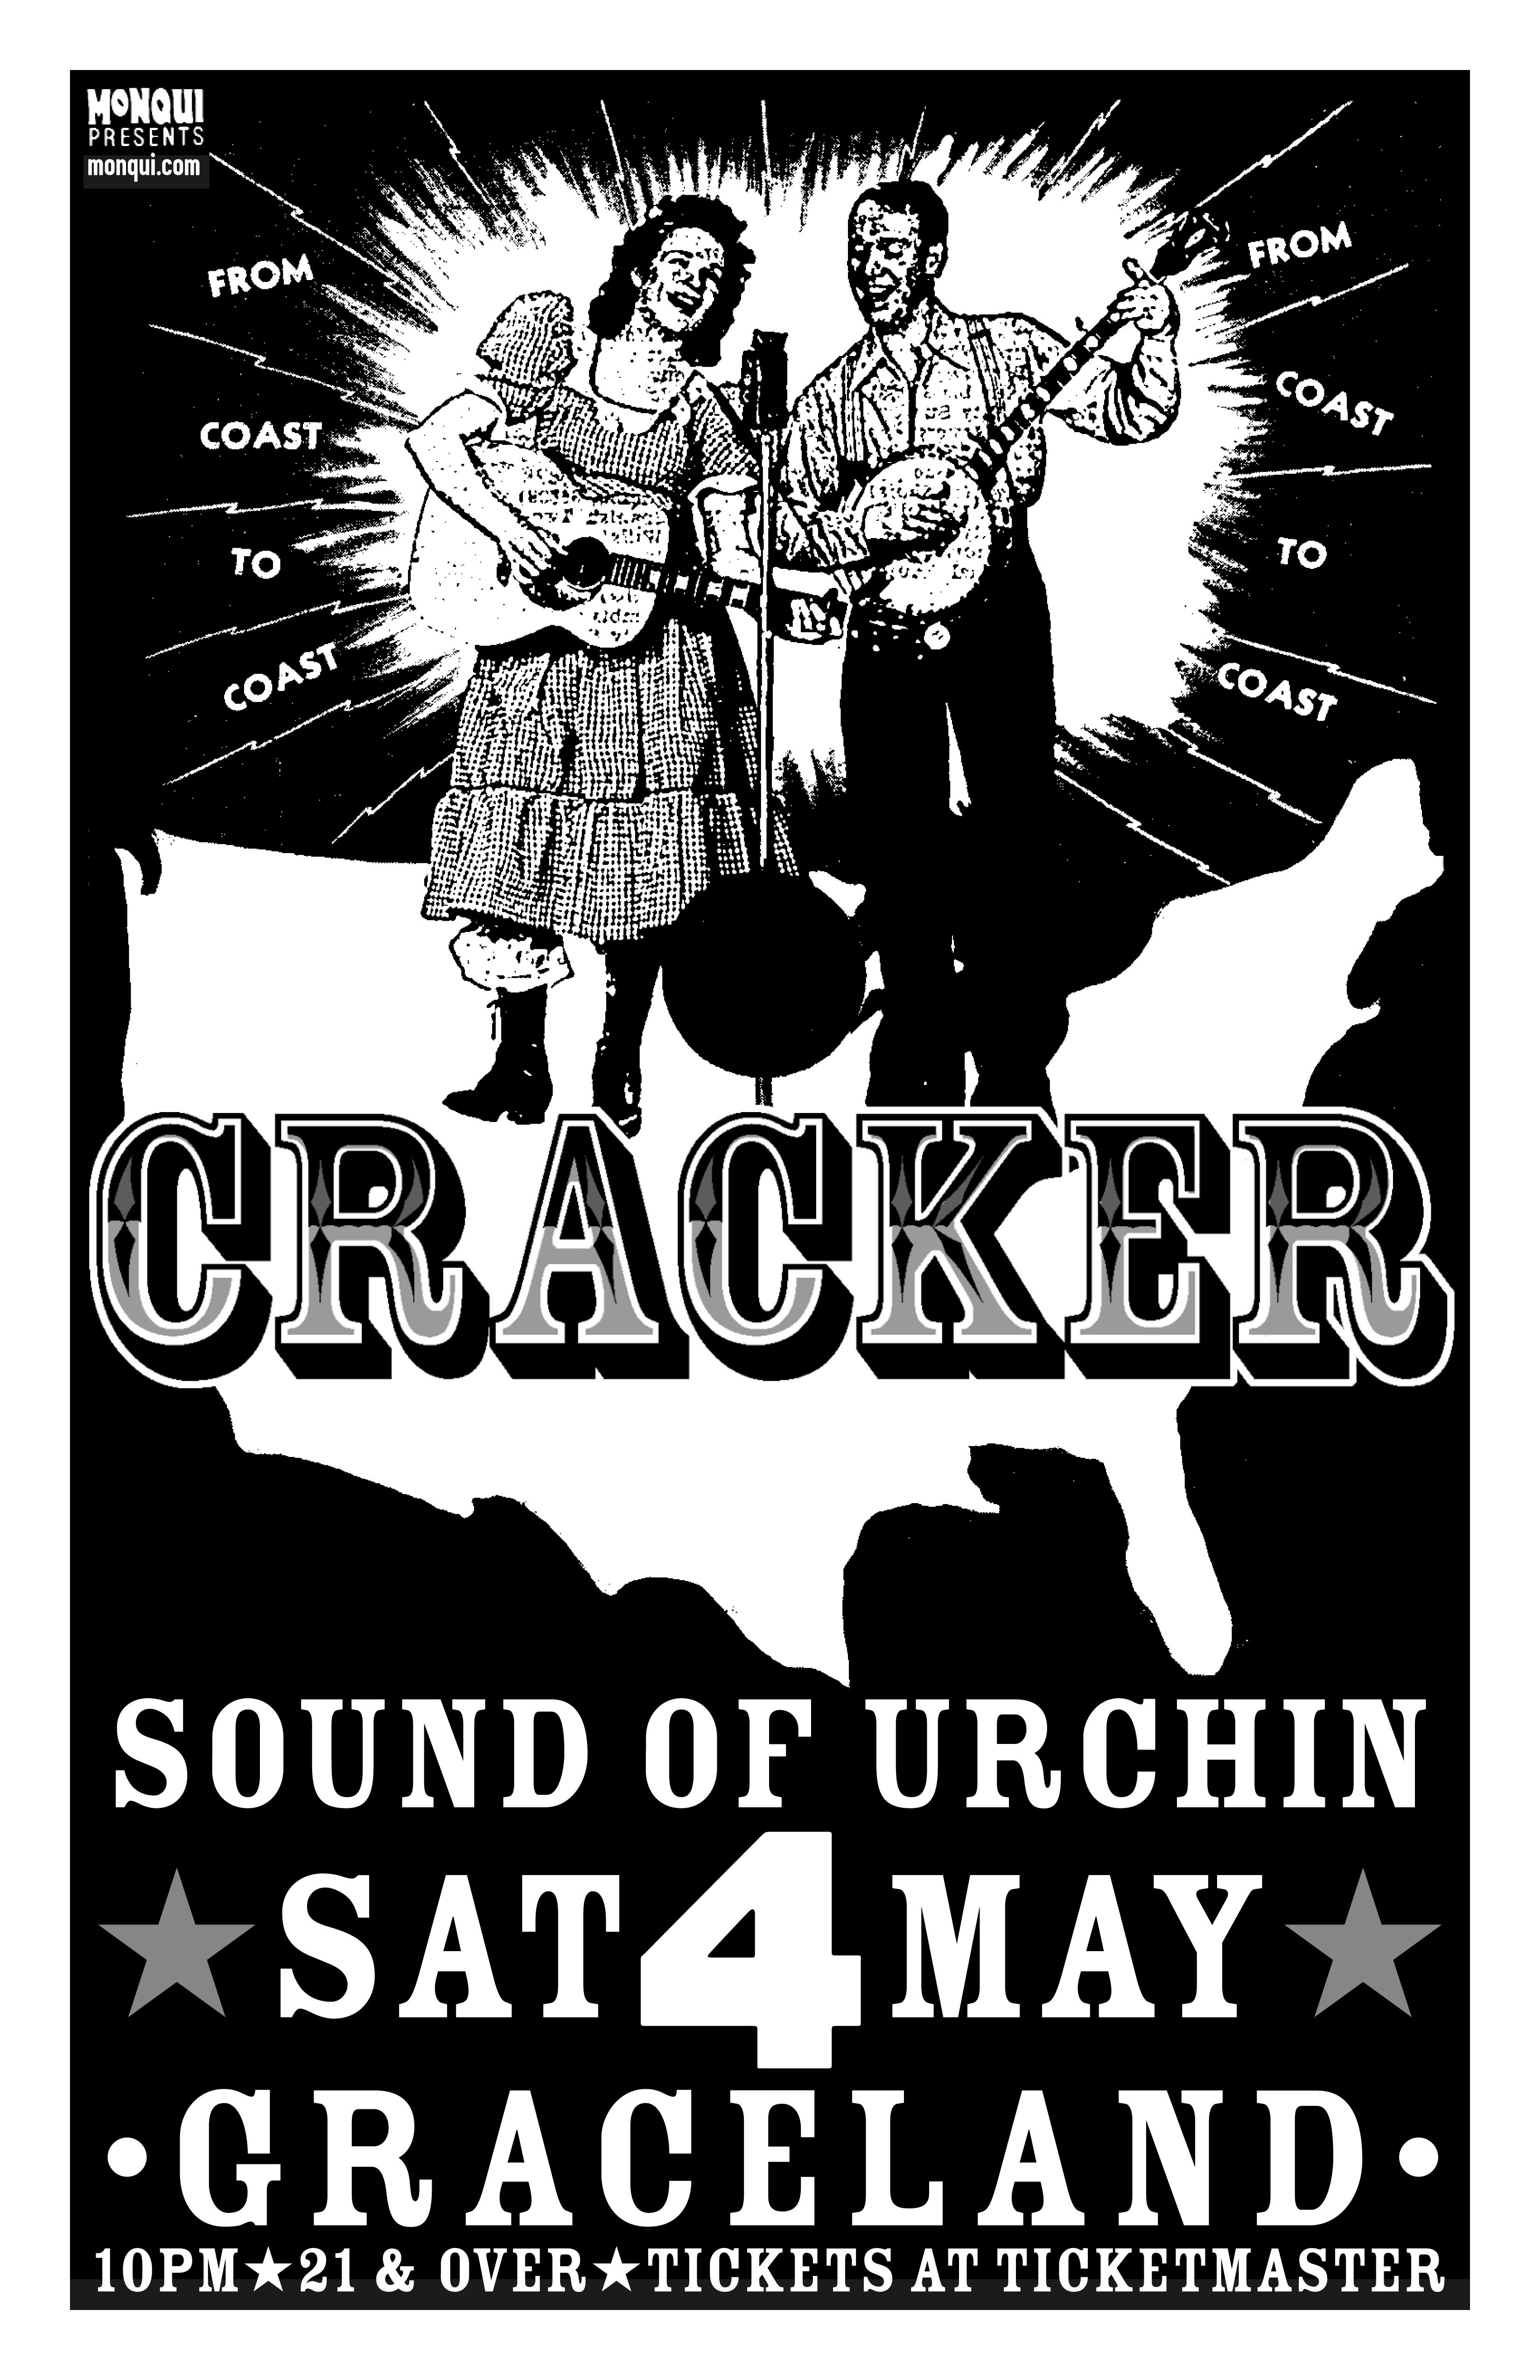 MXP-142.18 Cracker 2002 Graceland  May 4 Concert Poster